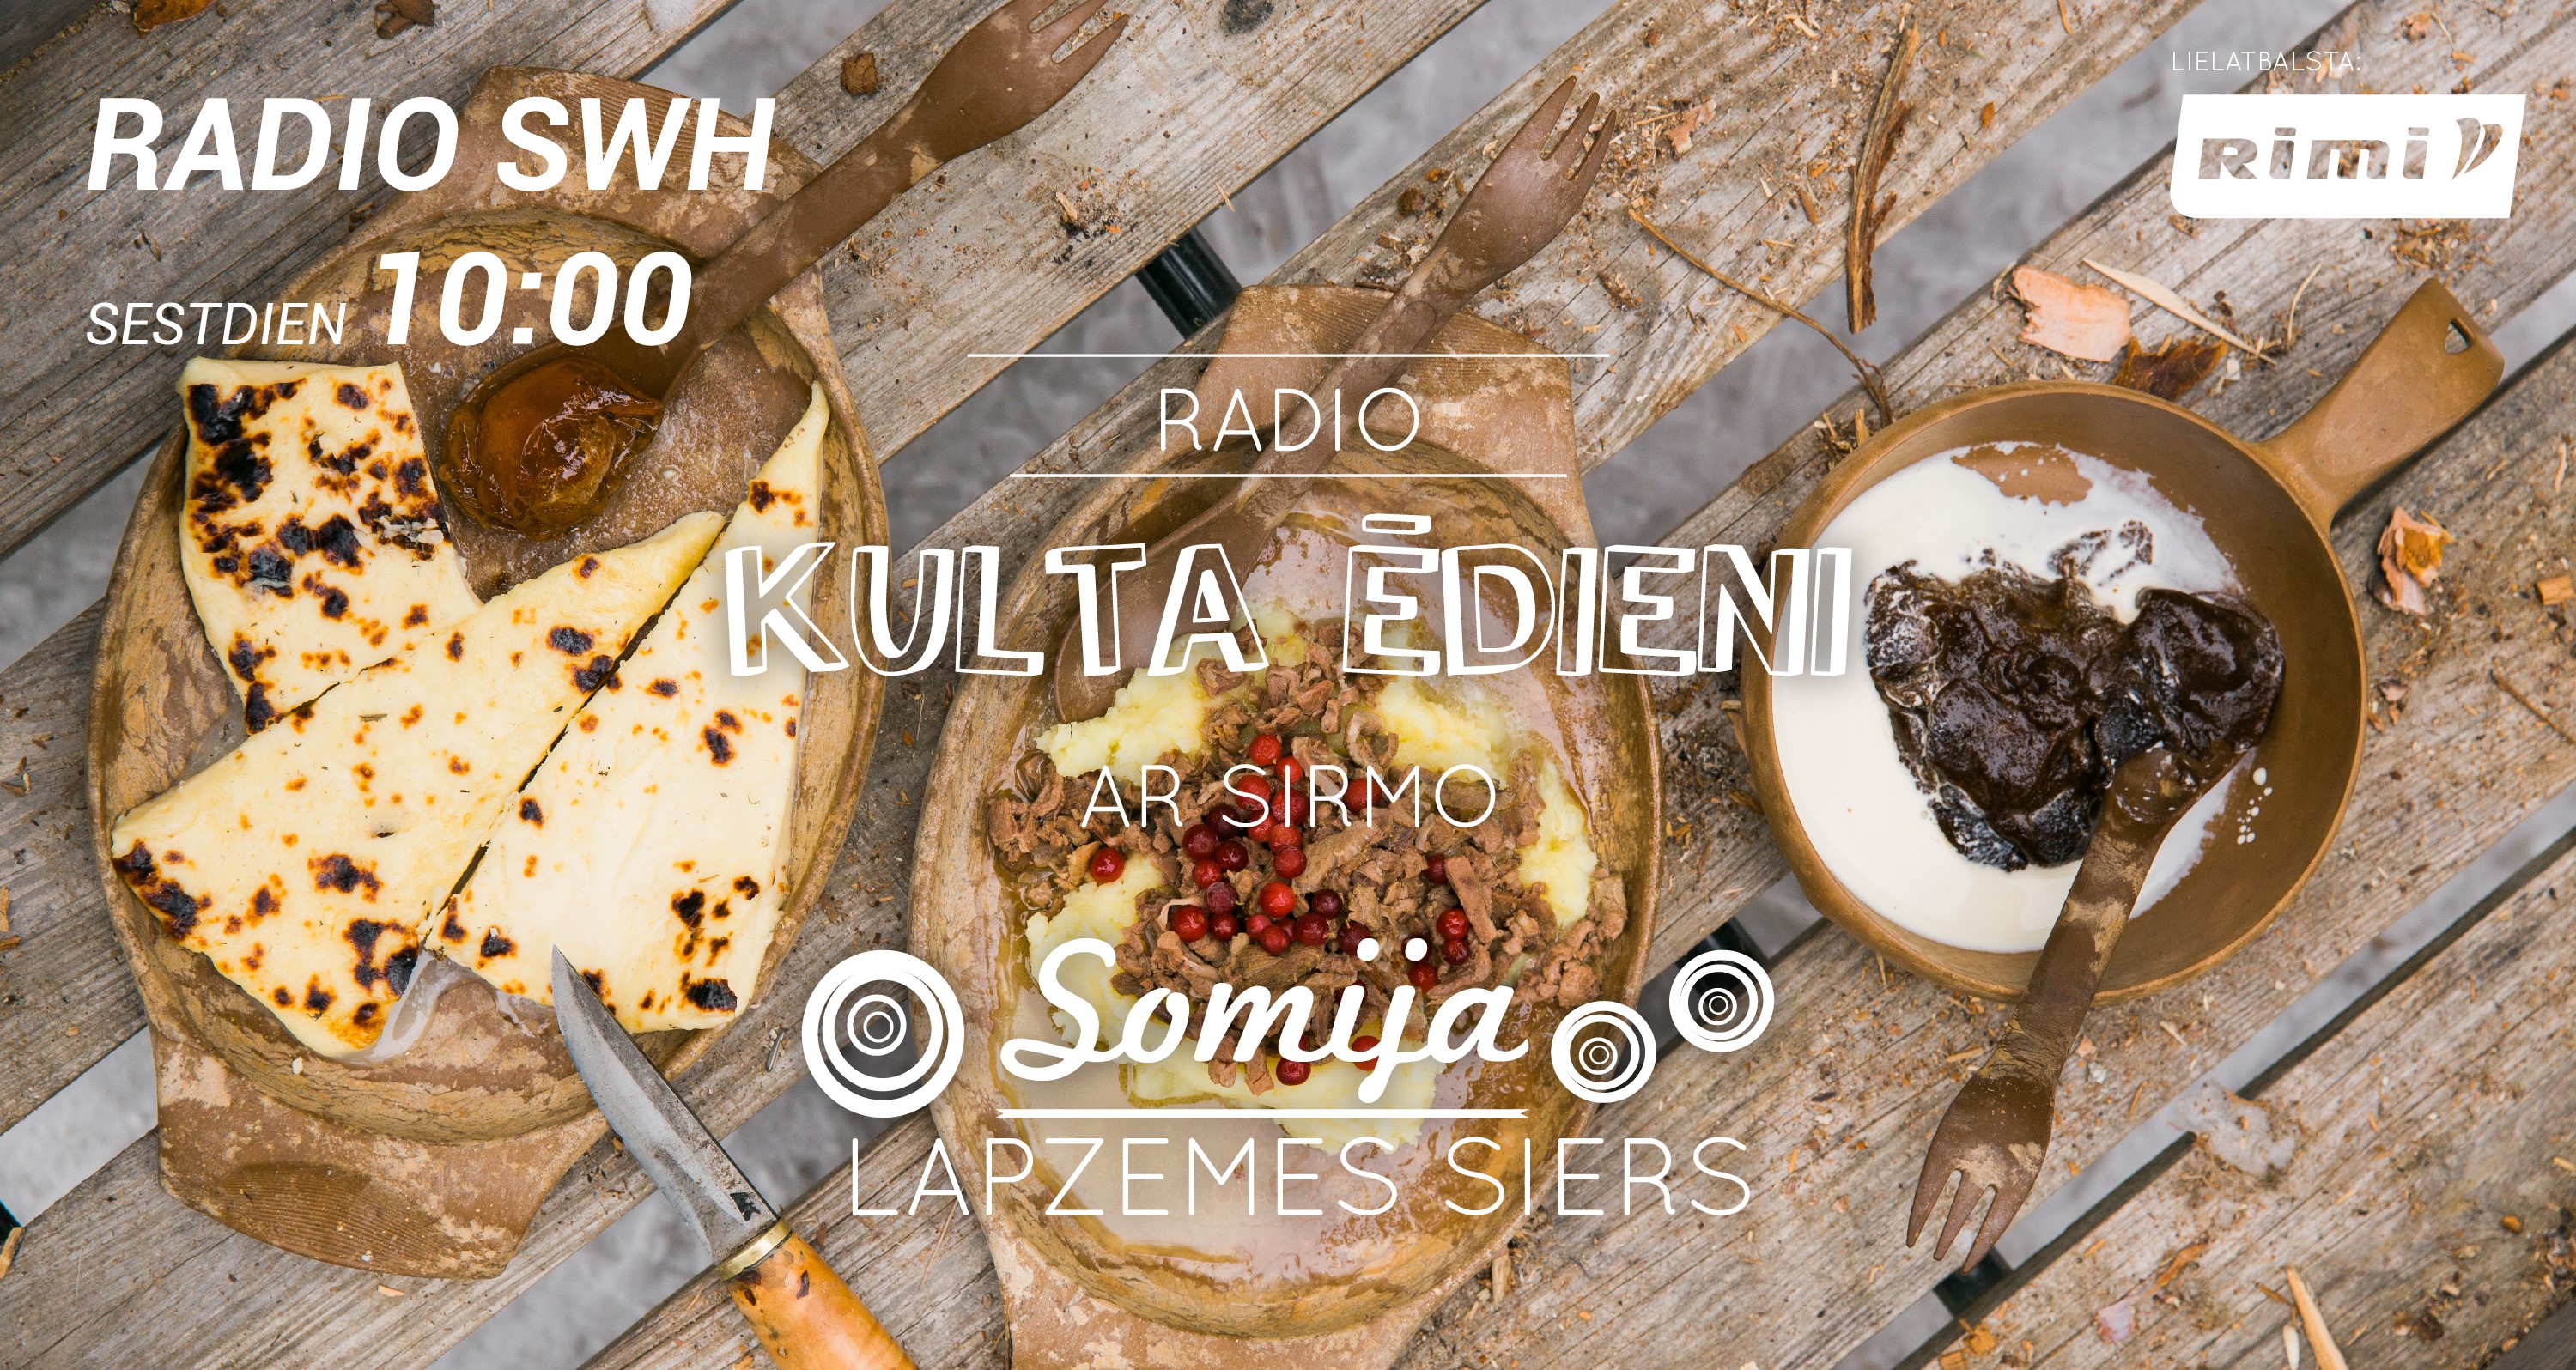 Radio Kulta ēdieni – SOMIJA. Lapzemes siers